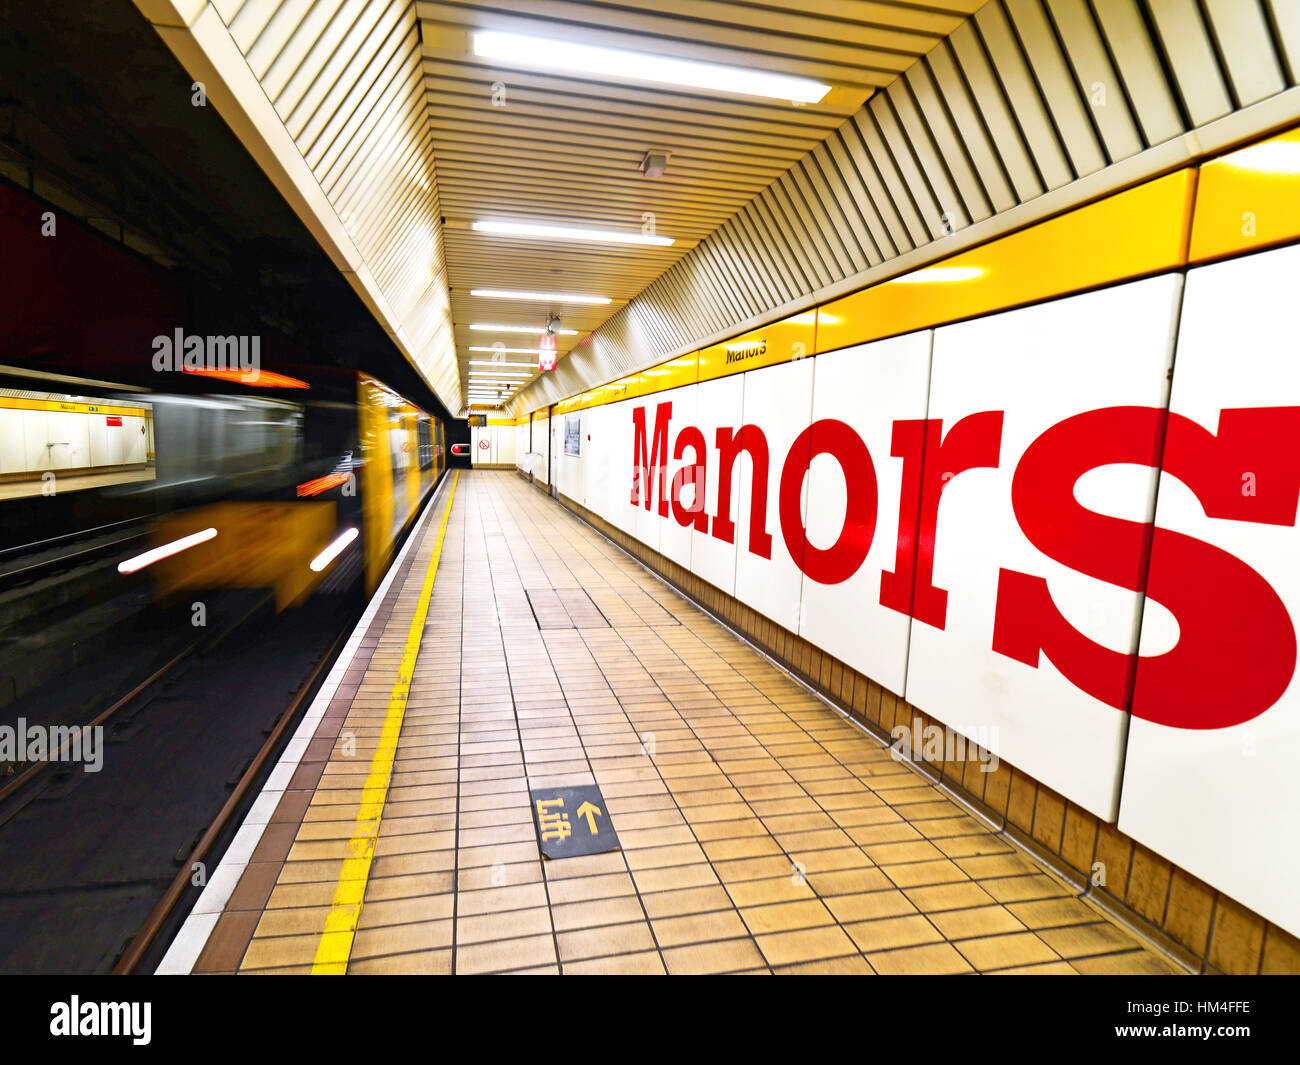 manors-metro-station-newcastle-upon-tyne-HM4FFE.jpg